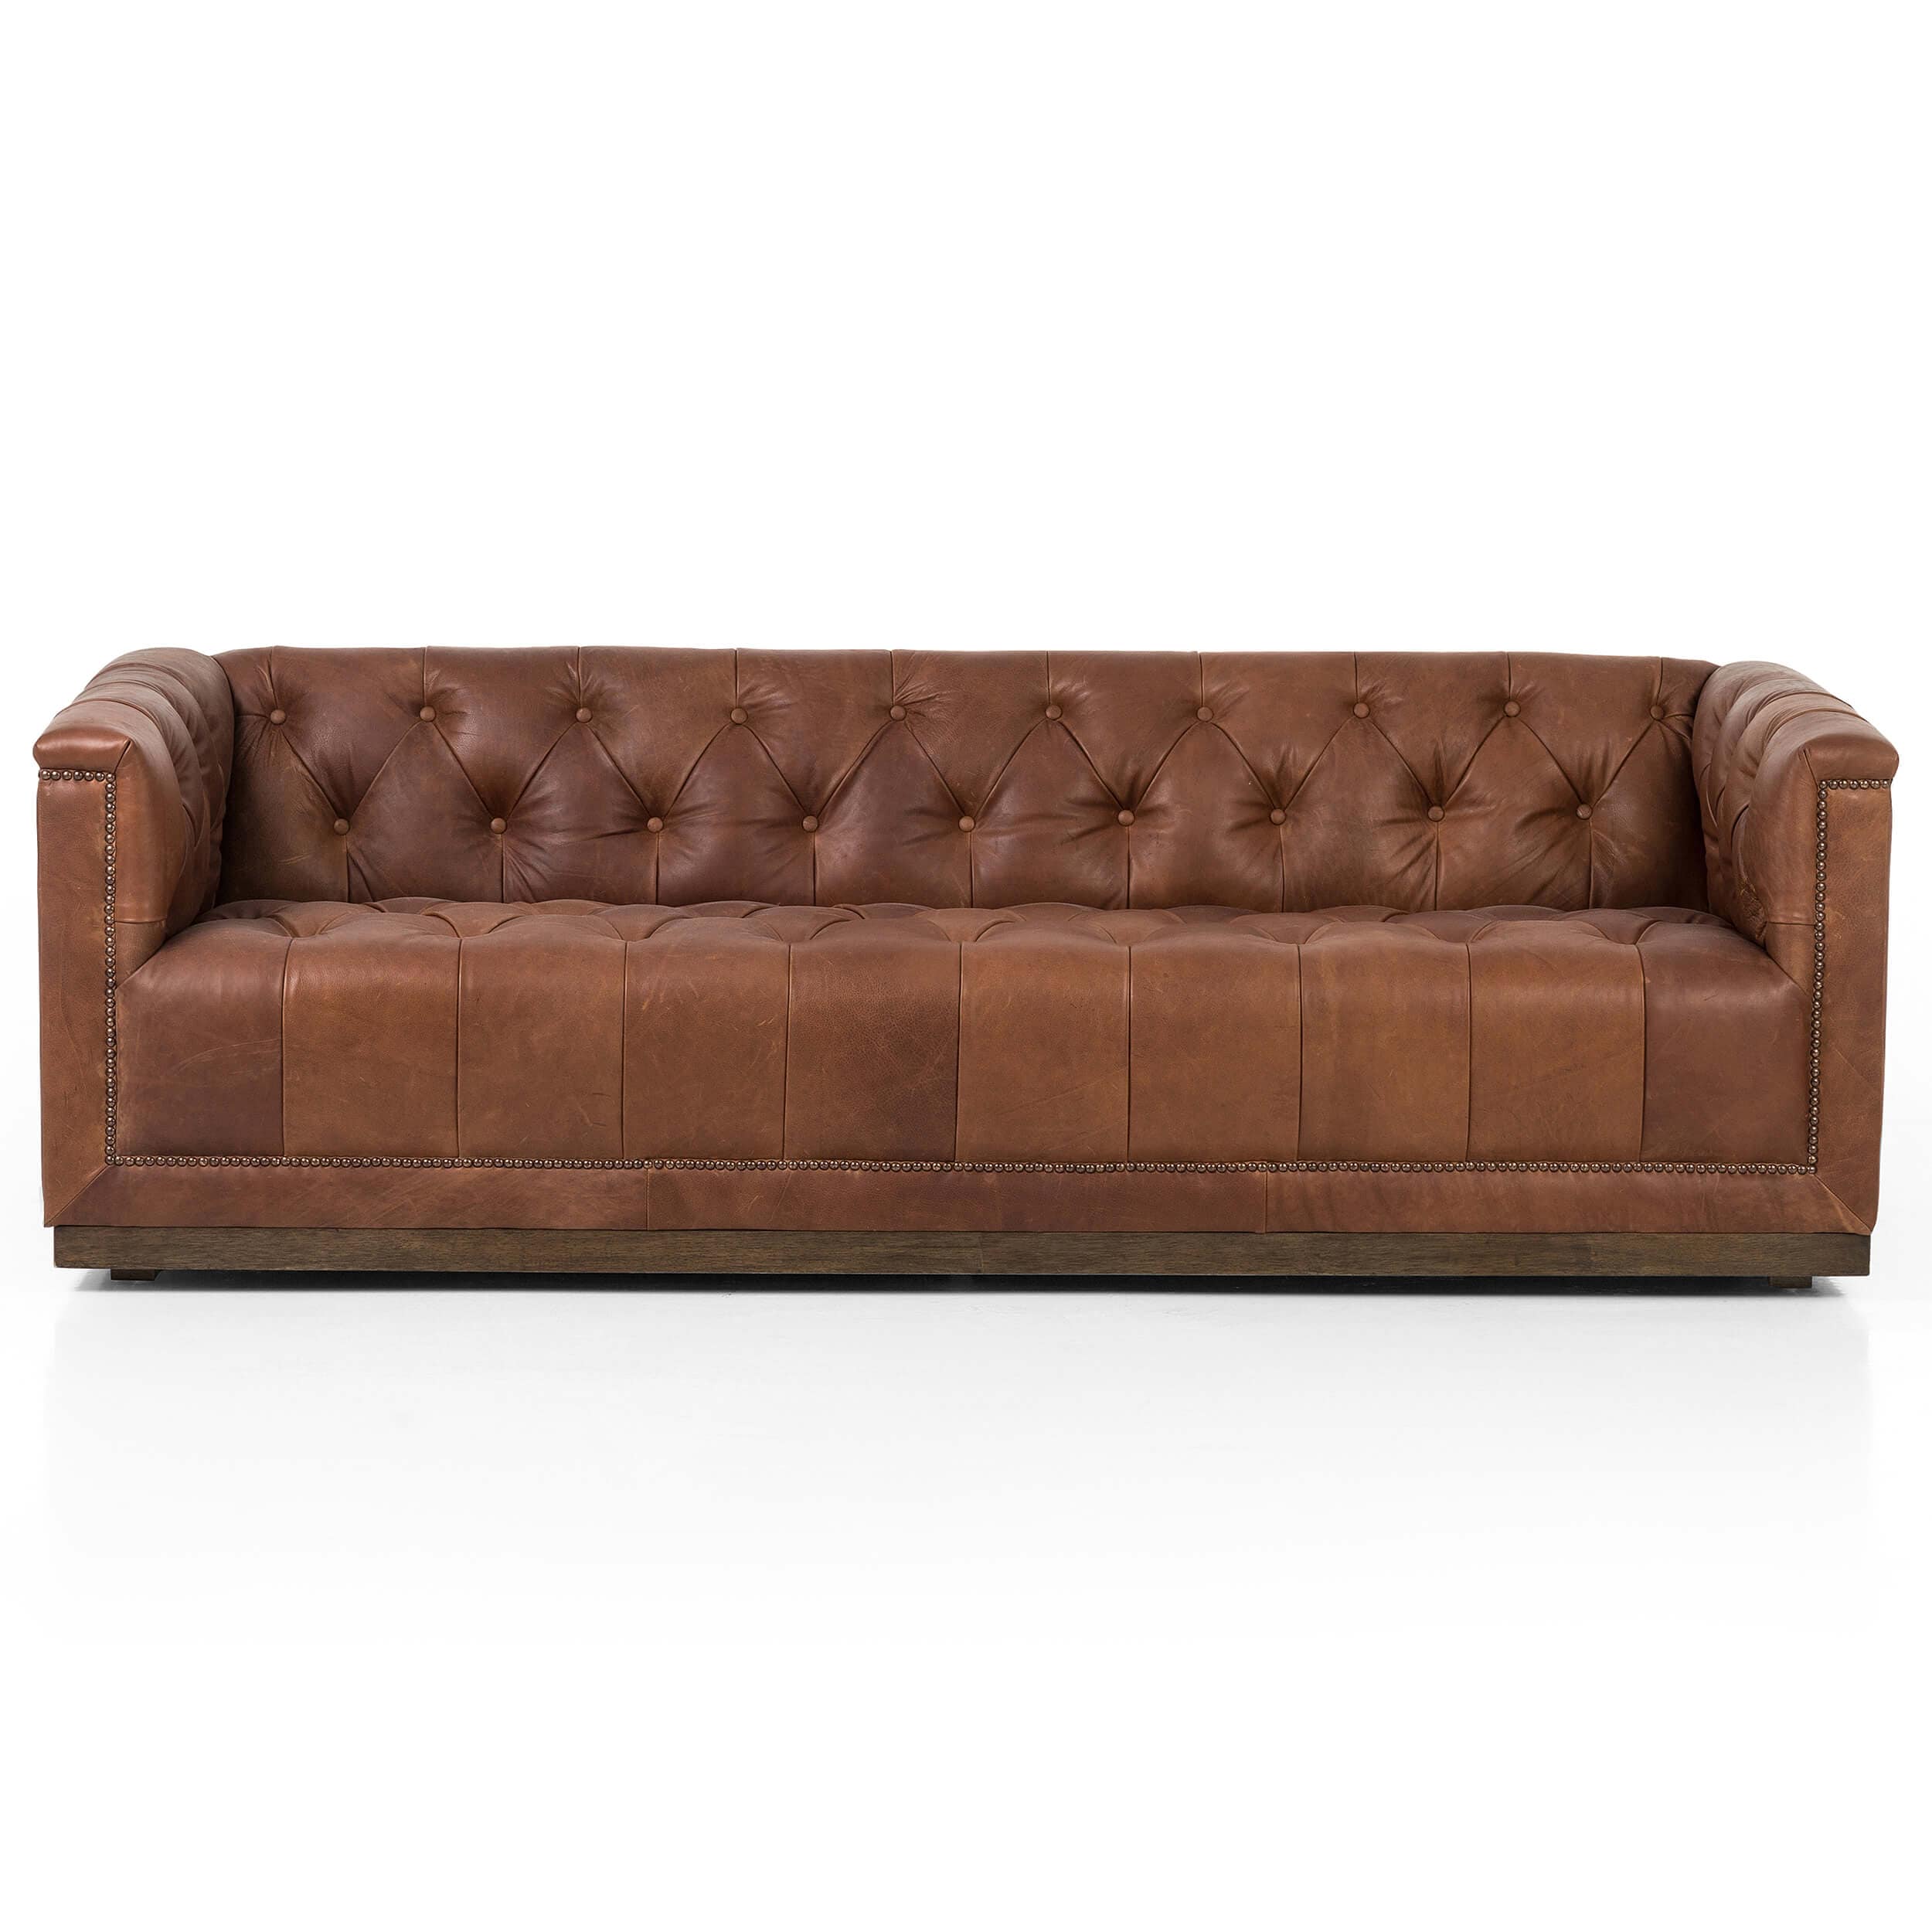 Image of Maxx Leather 86" Sofa, Heirloom Sienna